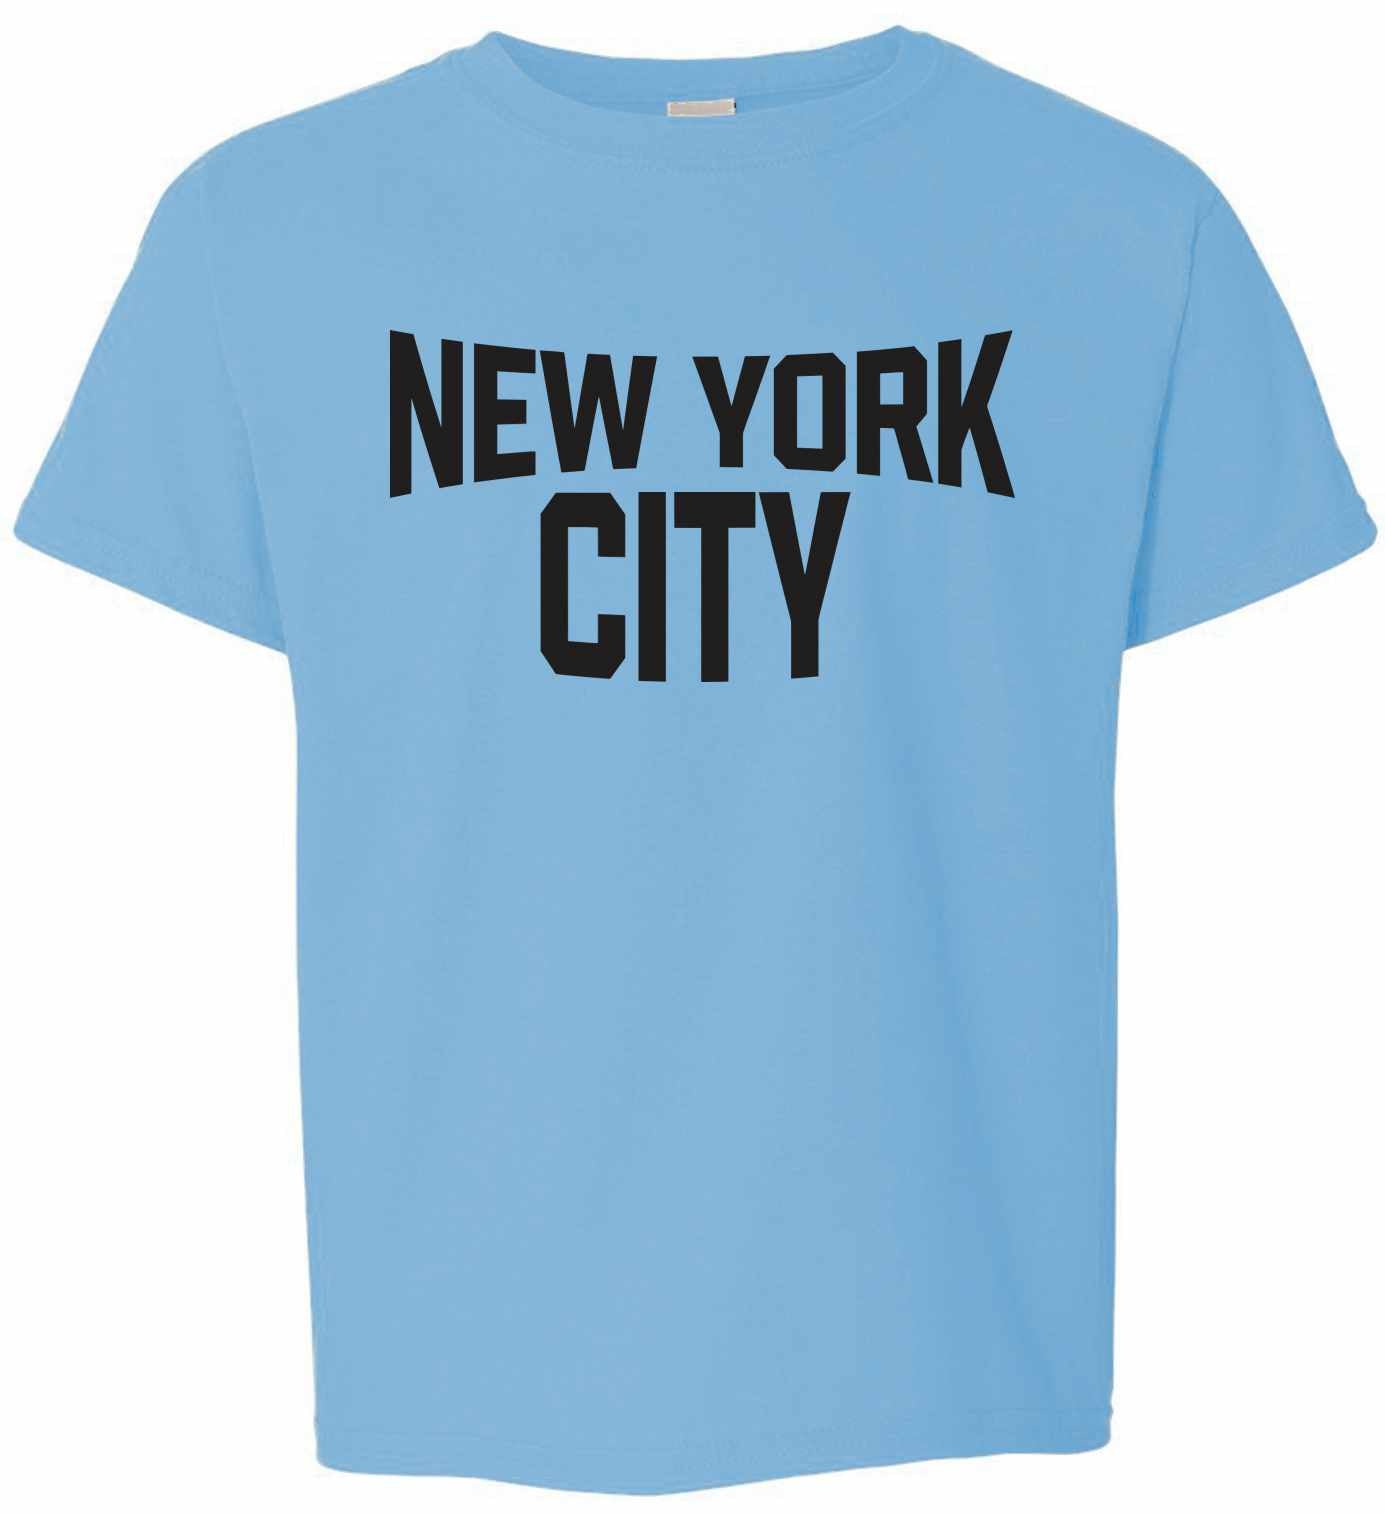 New York City on Kids T-Shirt (#1194-201)